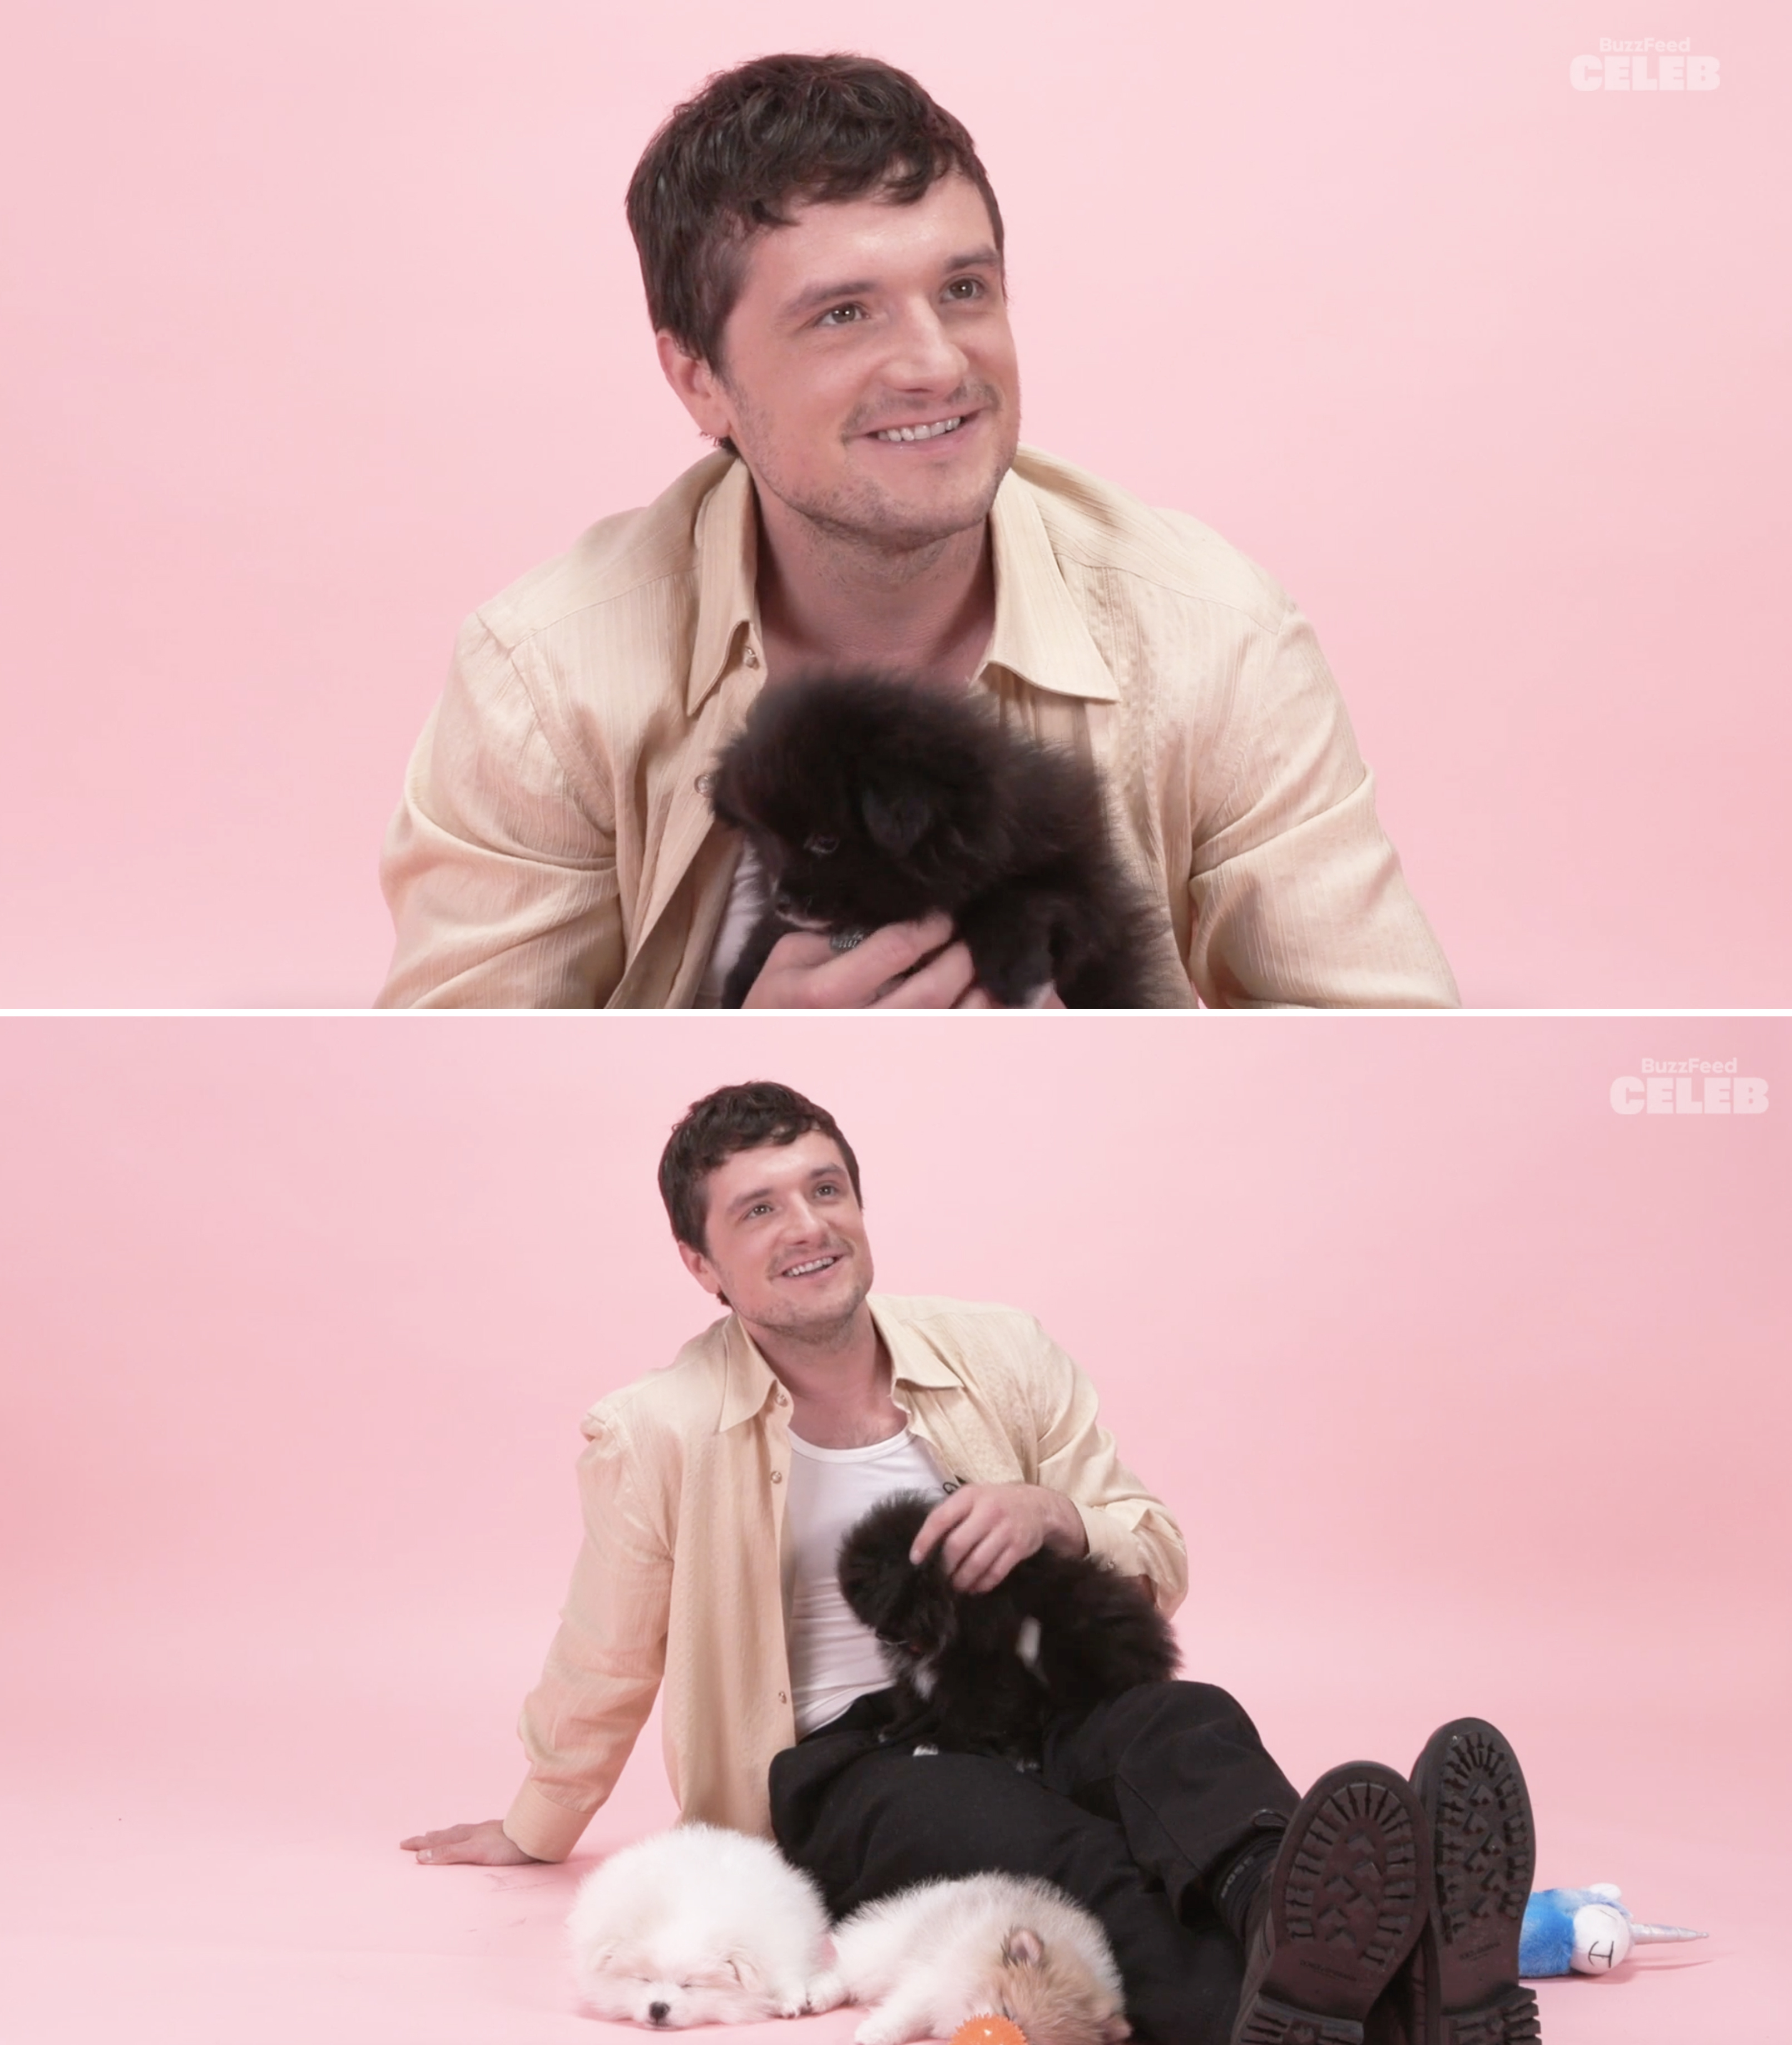 Josh Hutcherson playing with puppies